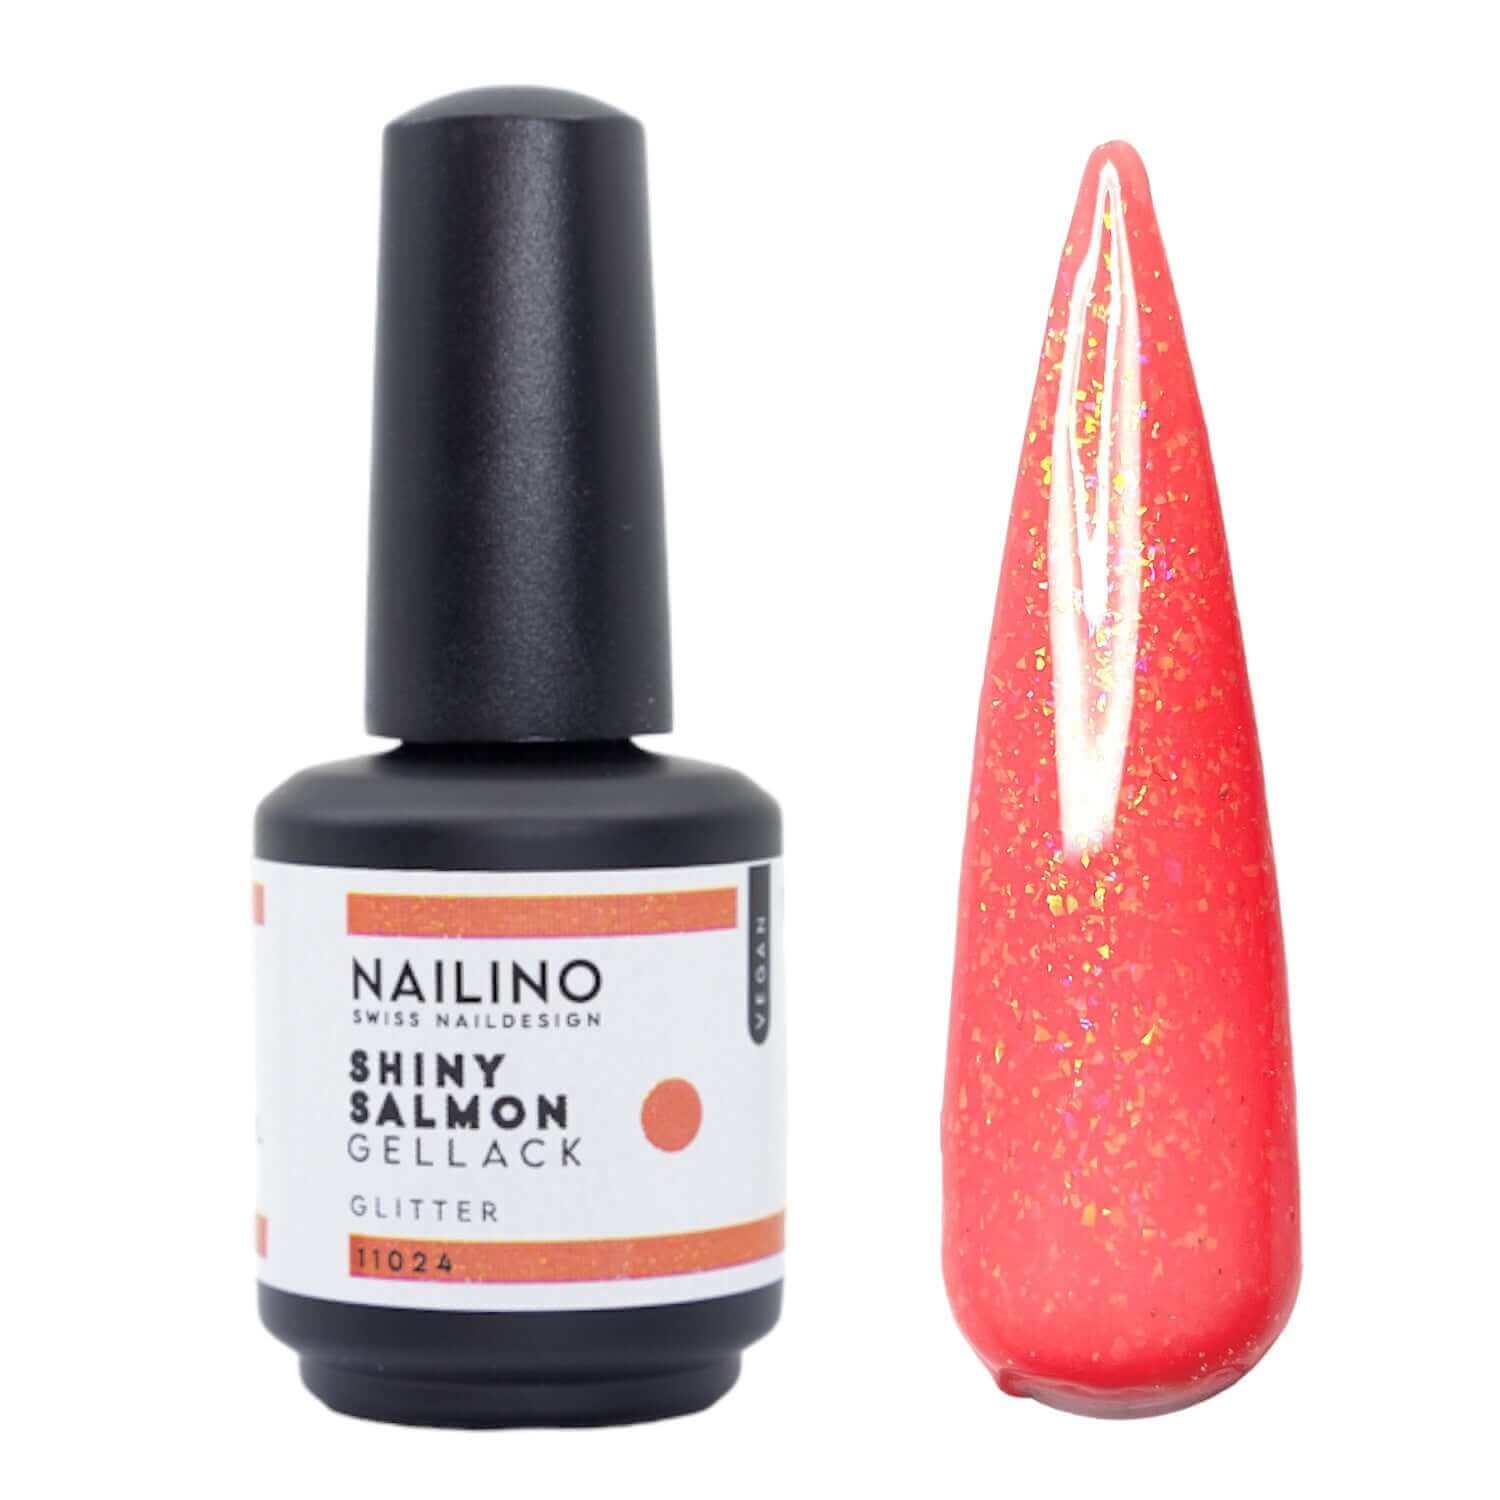 NAILINO Shellac Shiny Salmon -